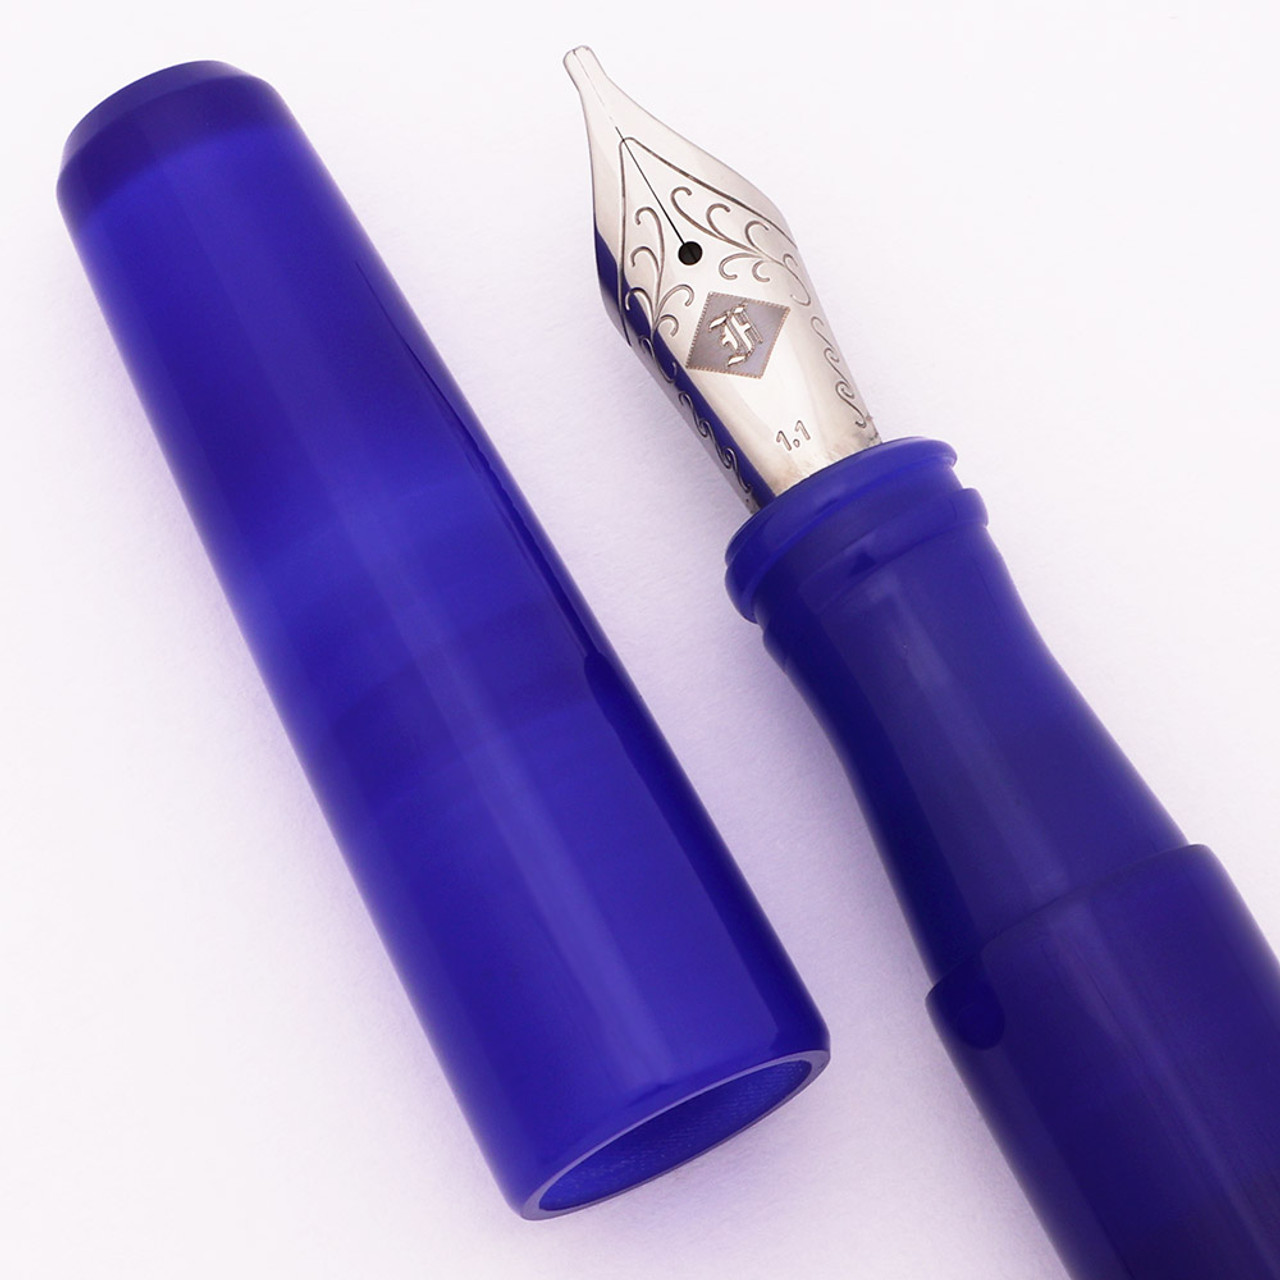 Franklin-Christoph Pocket 66 Fountain Pen - Cobalt Blue, Cartridge/Eye-Dropper, 1.1 Steel Nib (Excellent +, Works Well)